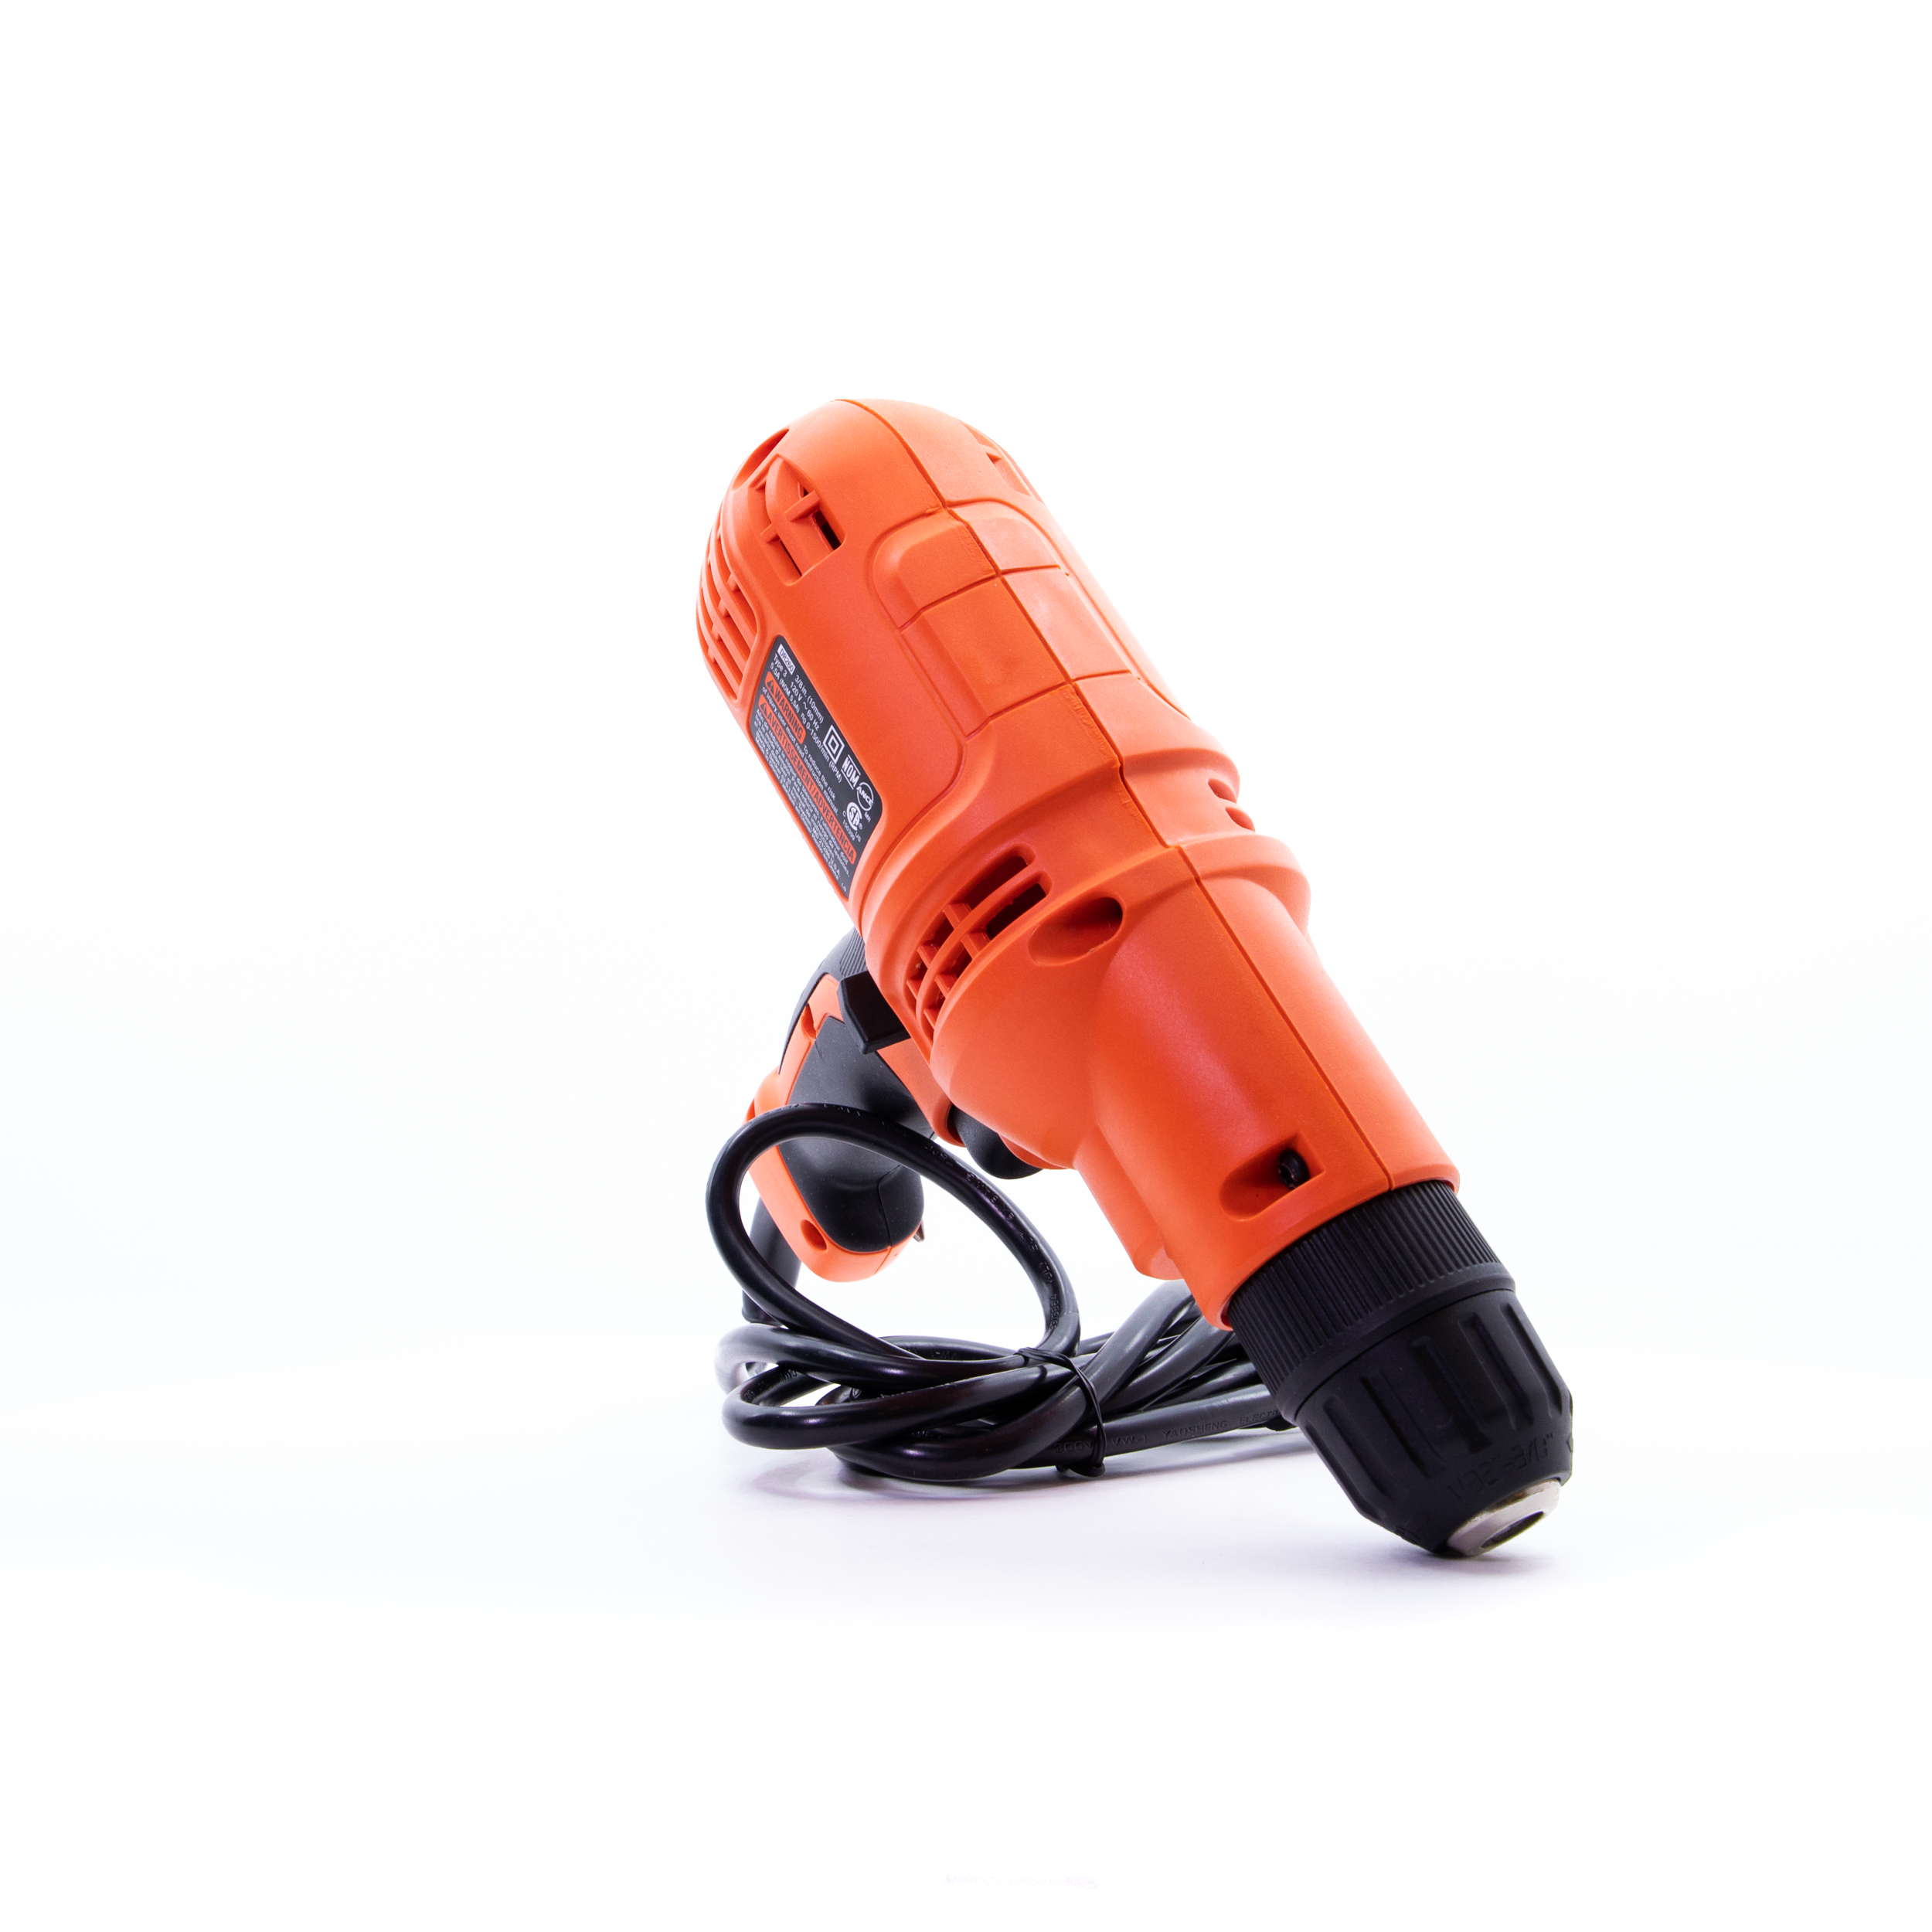 Black & Decker DR260 5.2 Amp 3/8 in. Corded Drill - Orange